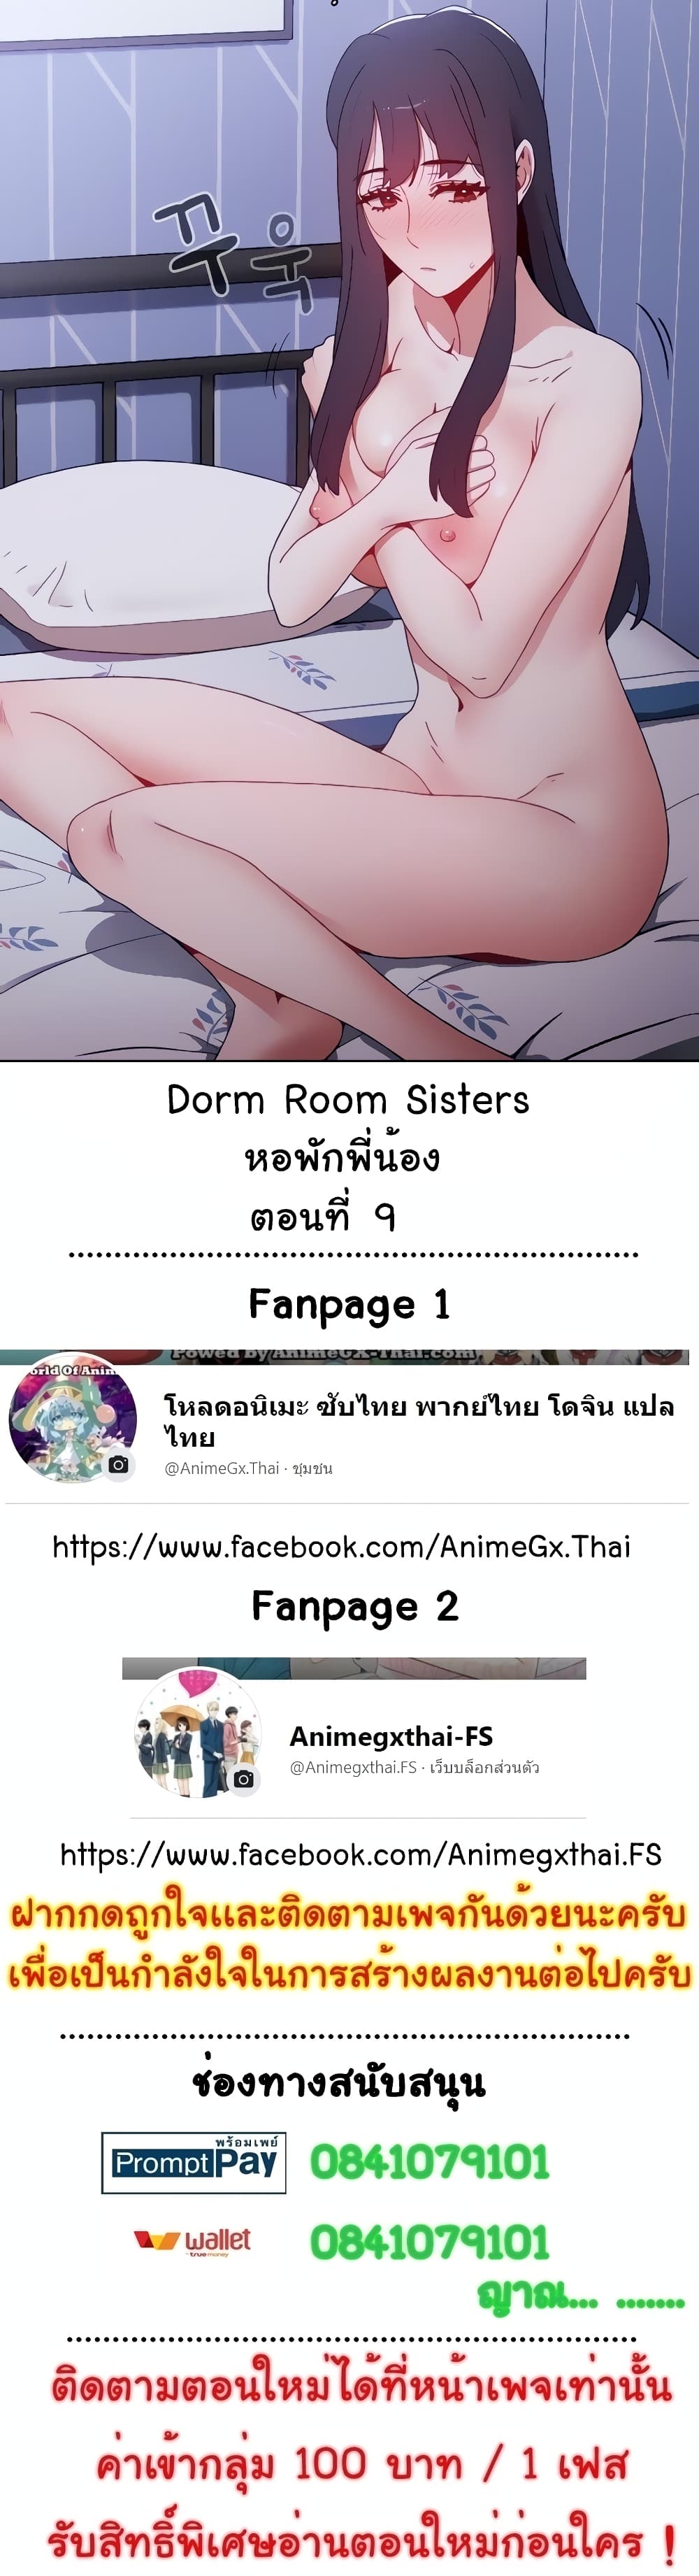 Dorm Room Sisters 9 01